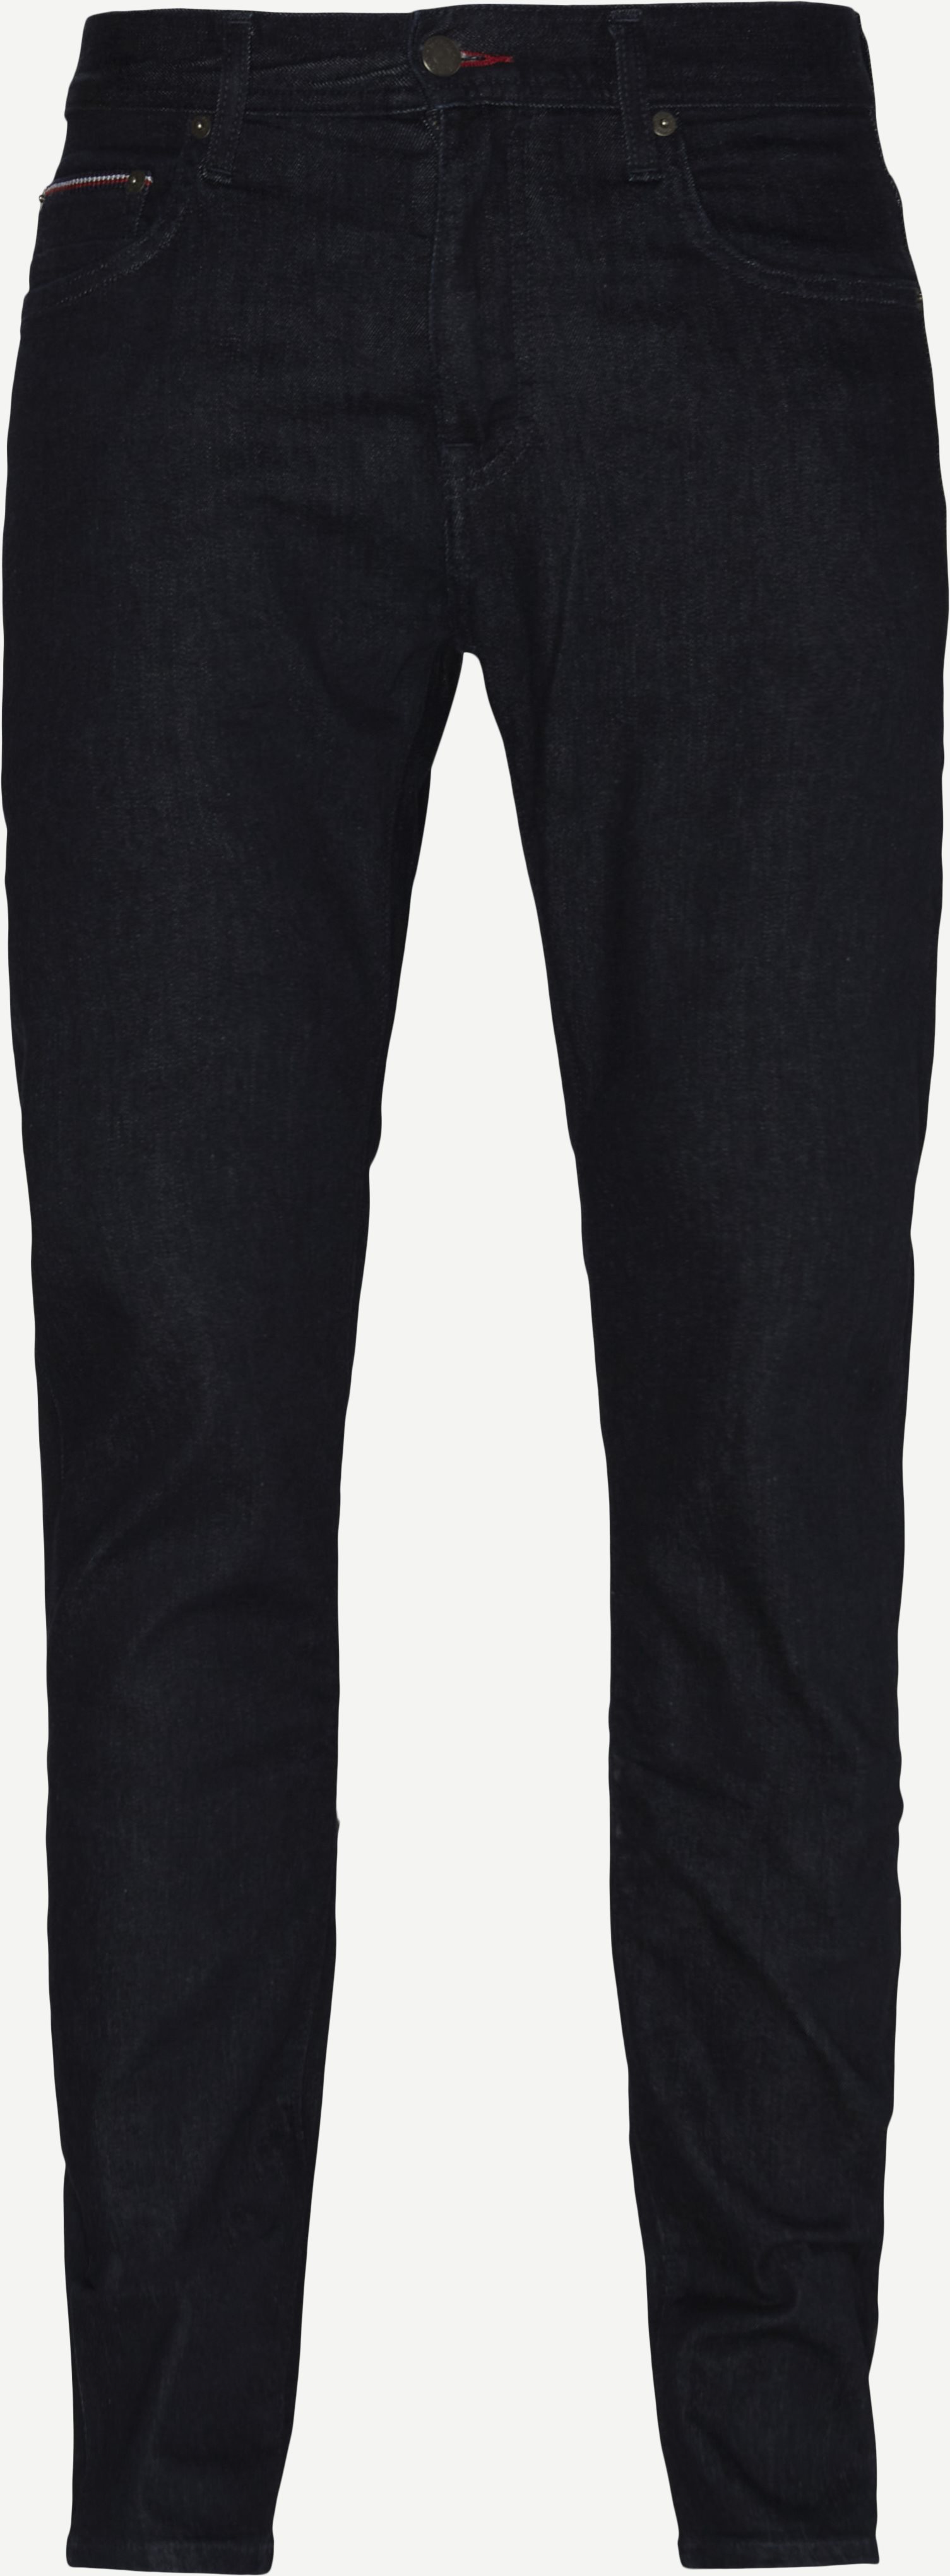 15600 Bleecker Jeans - Jeans - Slim fit - Denim